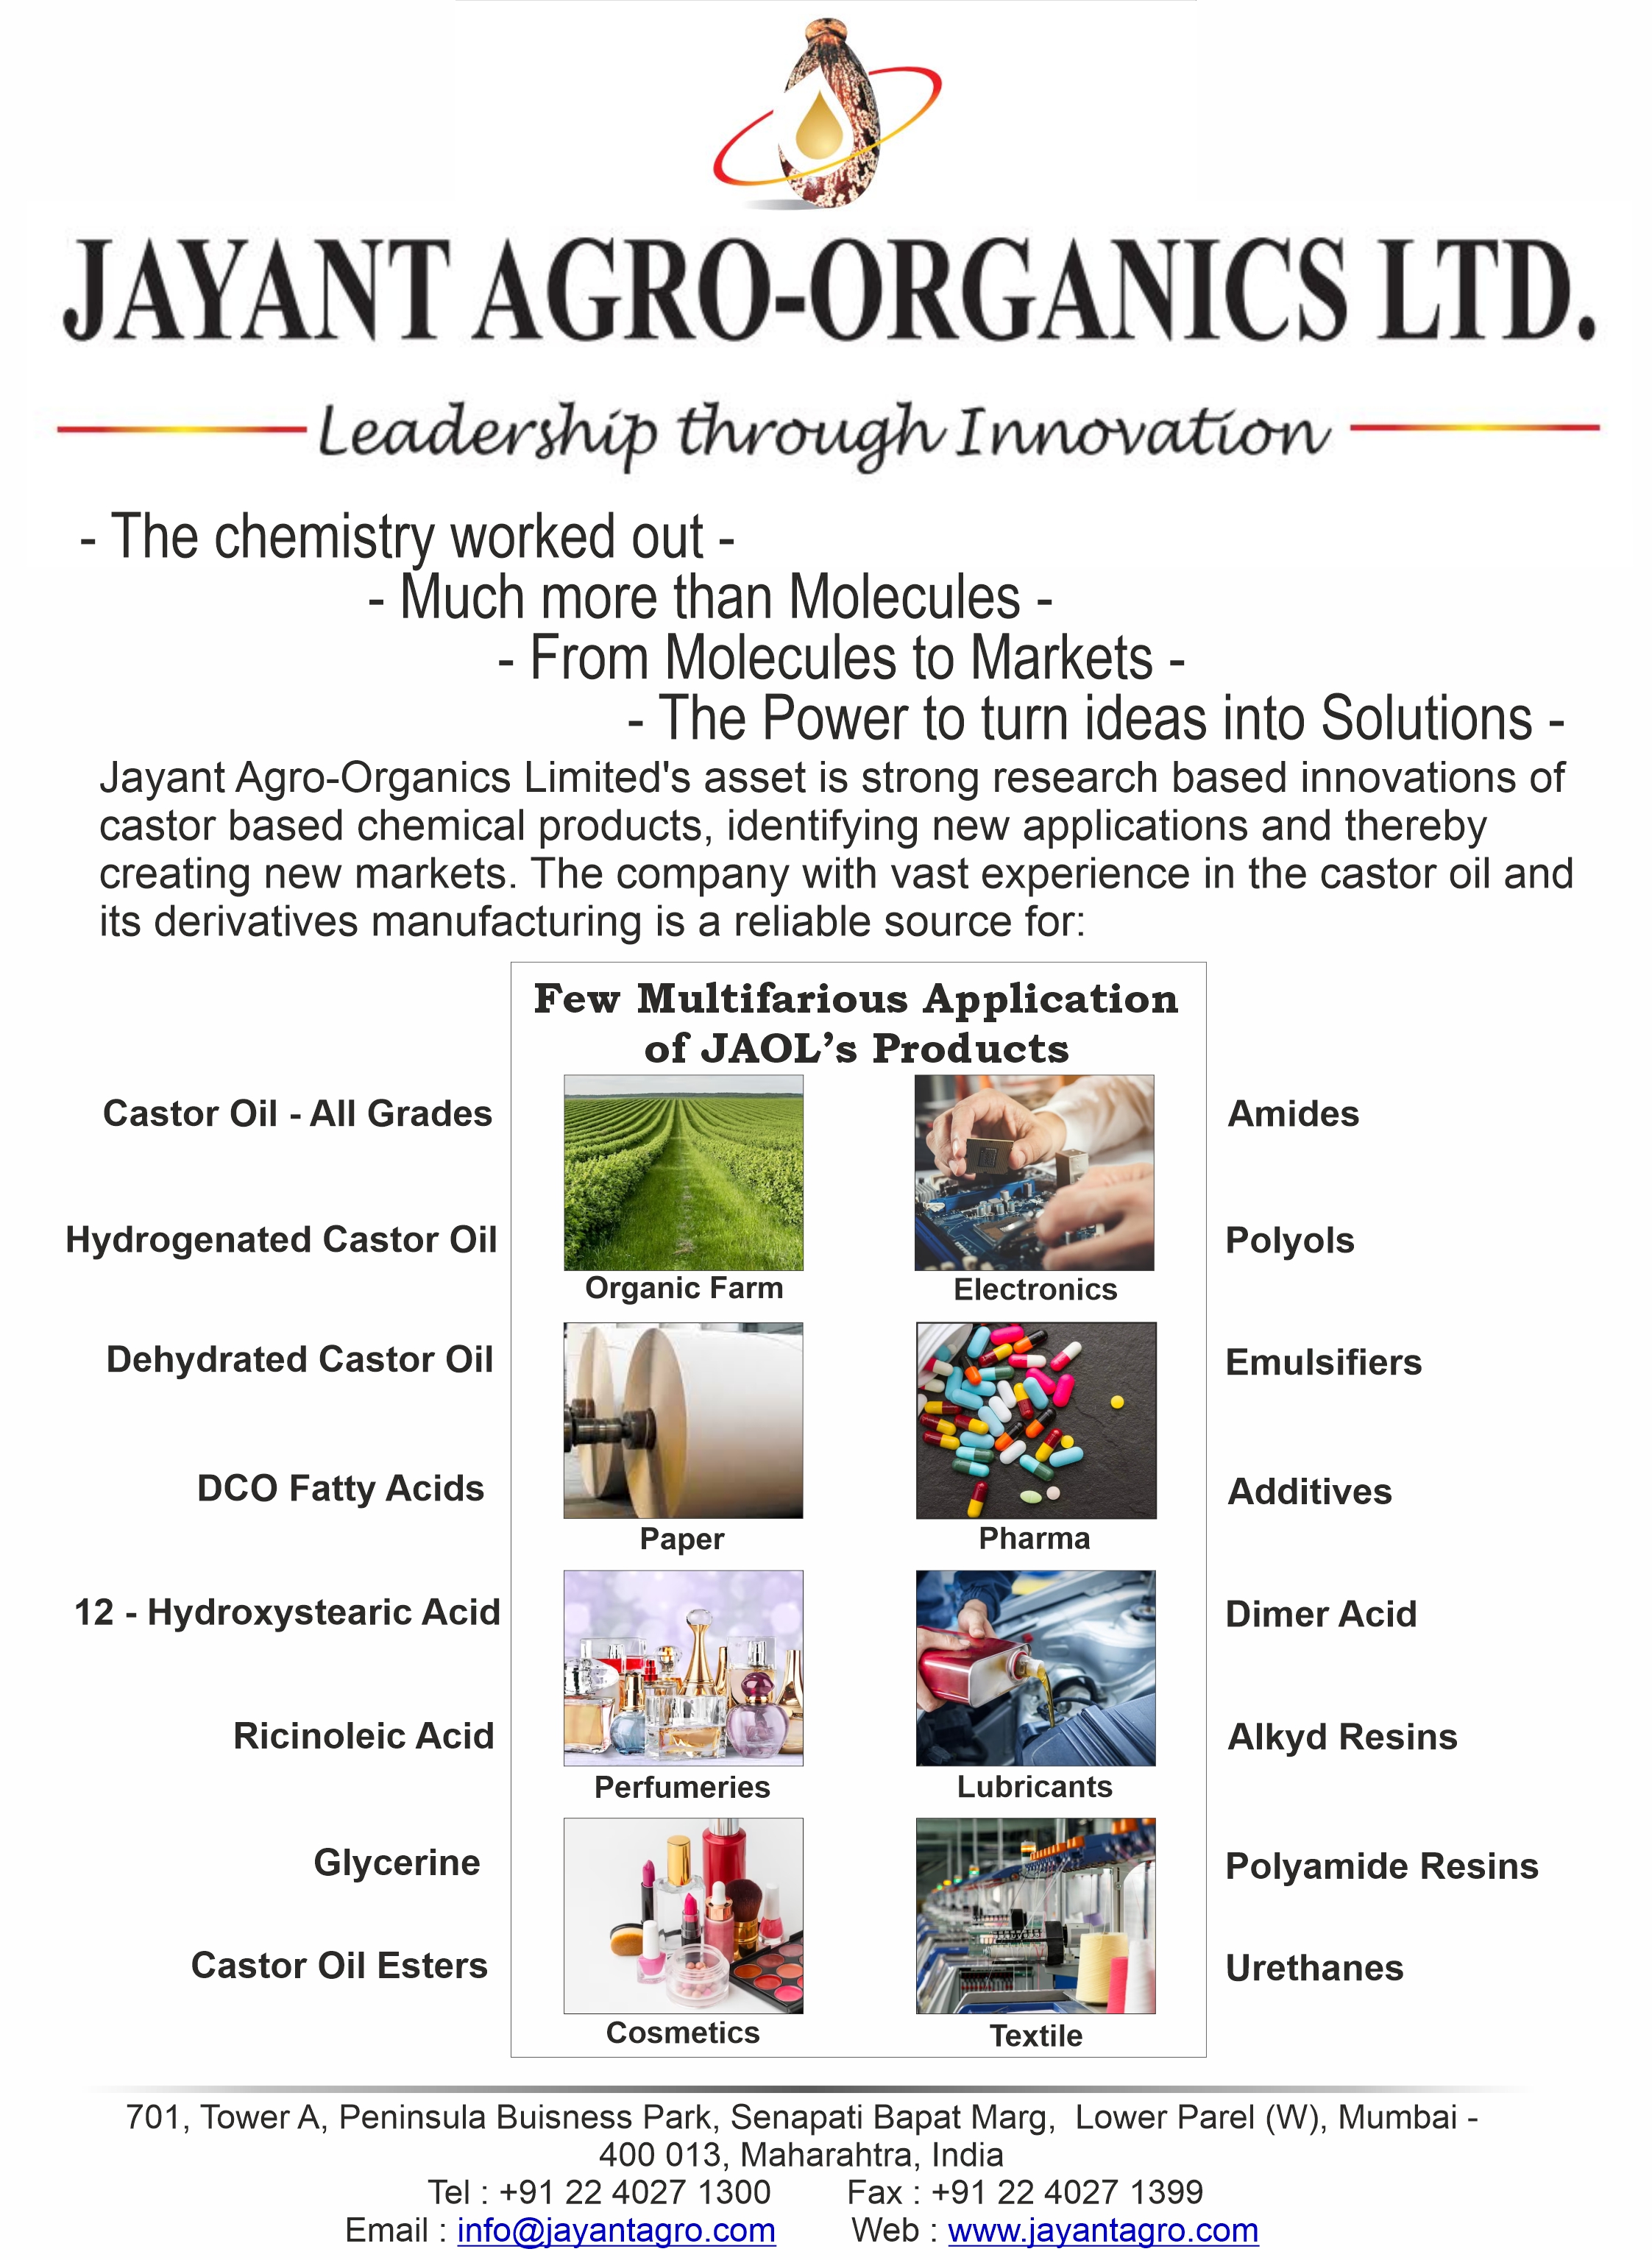 Jayant Agro-Organics Ltd.